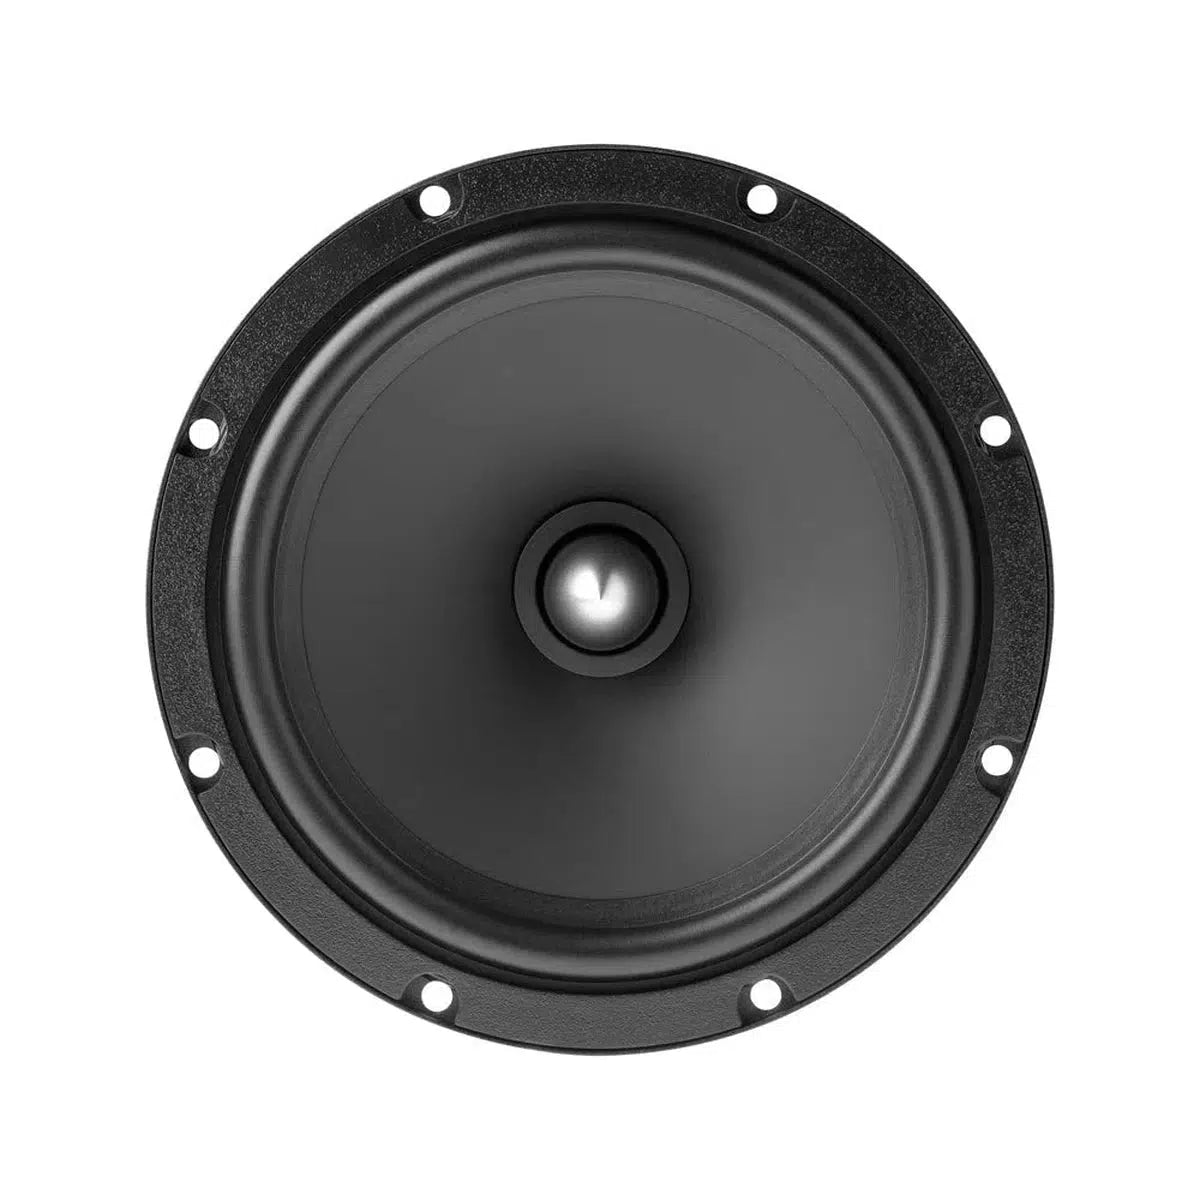 Focal-Auditor ASE165-6.5" (16,5cm) speaker set-Masori.de